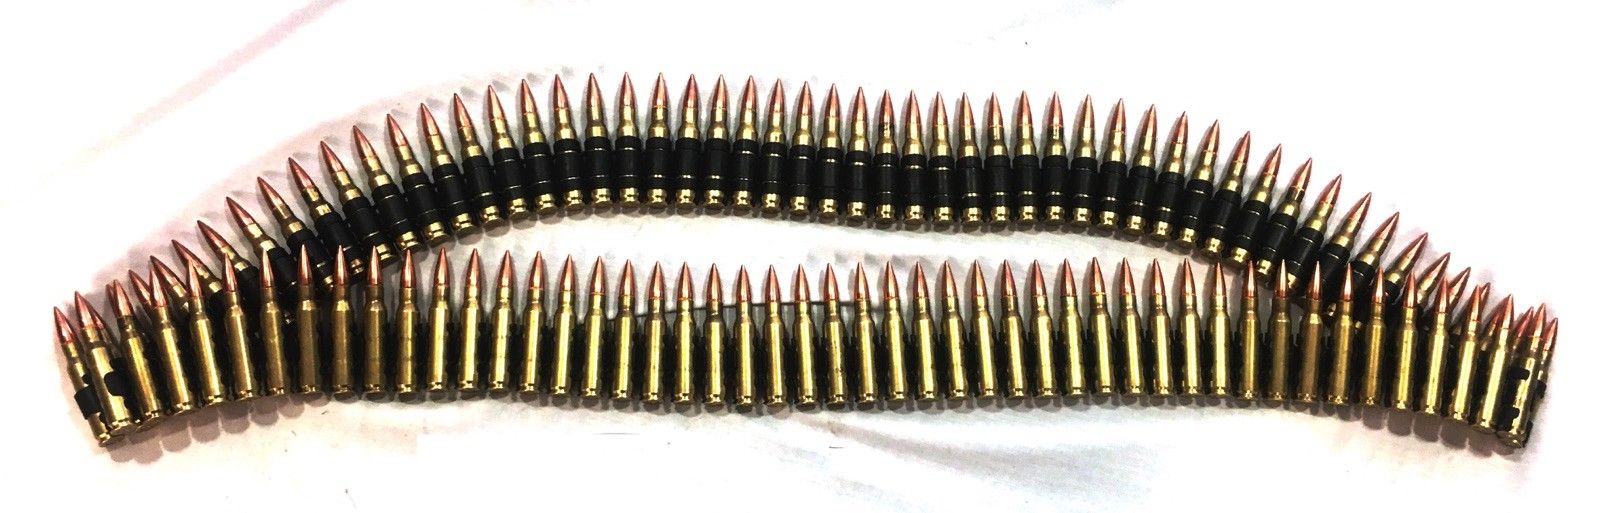 M240 belt 7.62 NATO Dummy Rounds Snap Caps Fake Bullets J&M Spec INERT